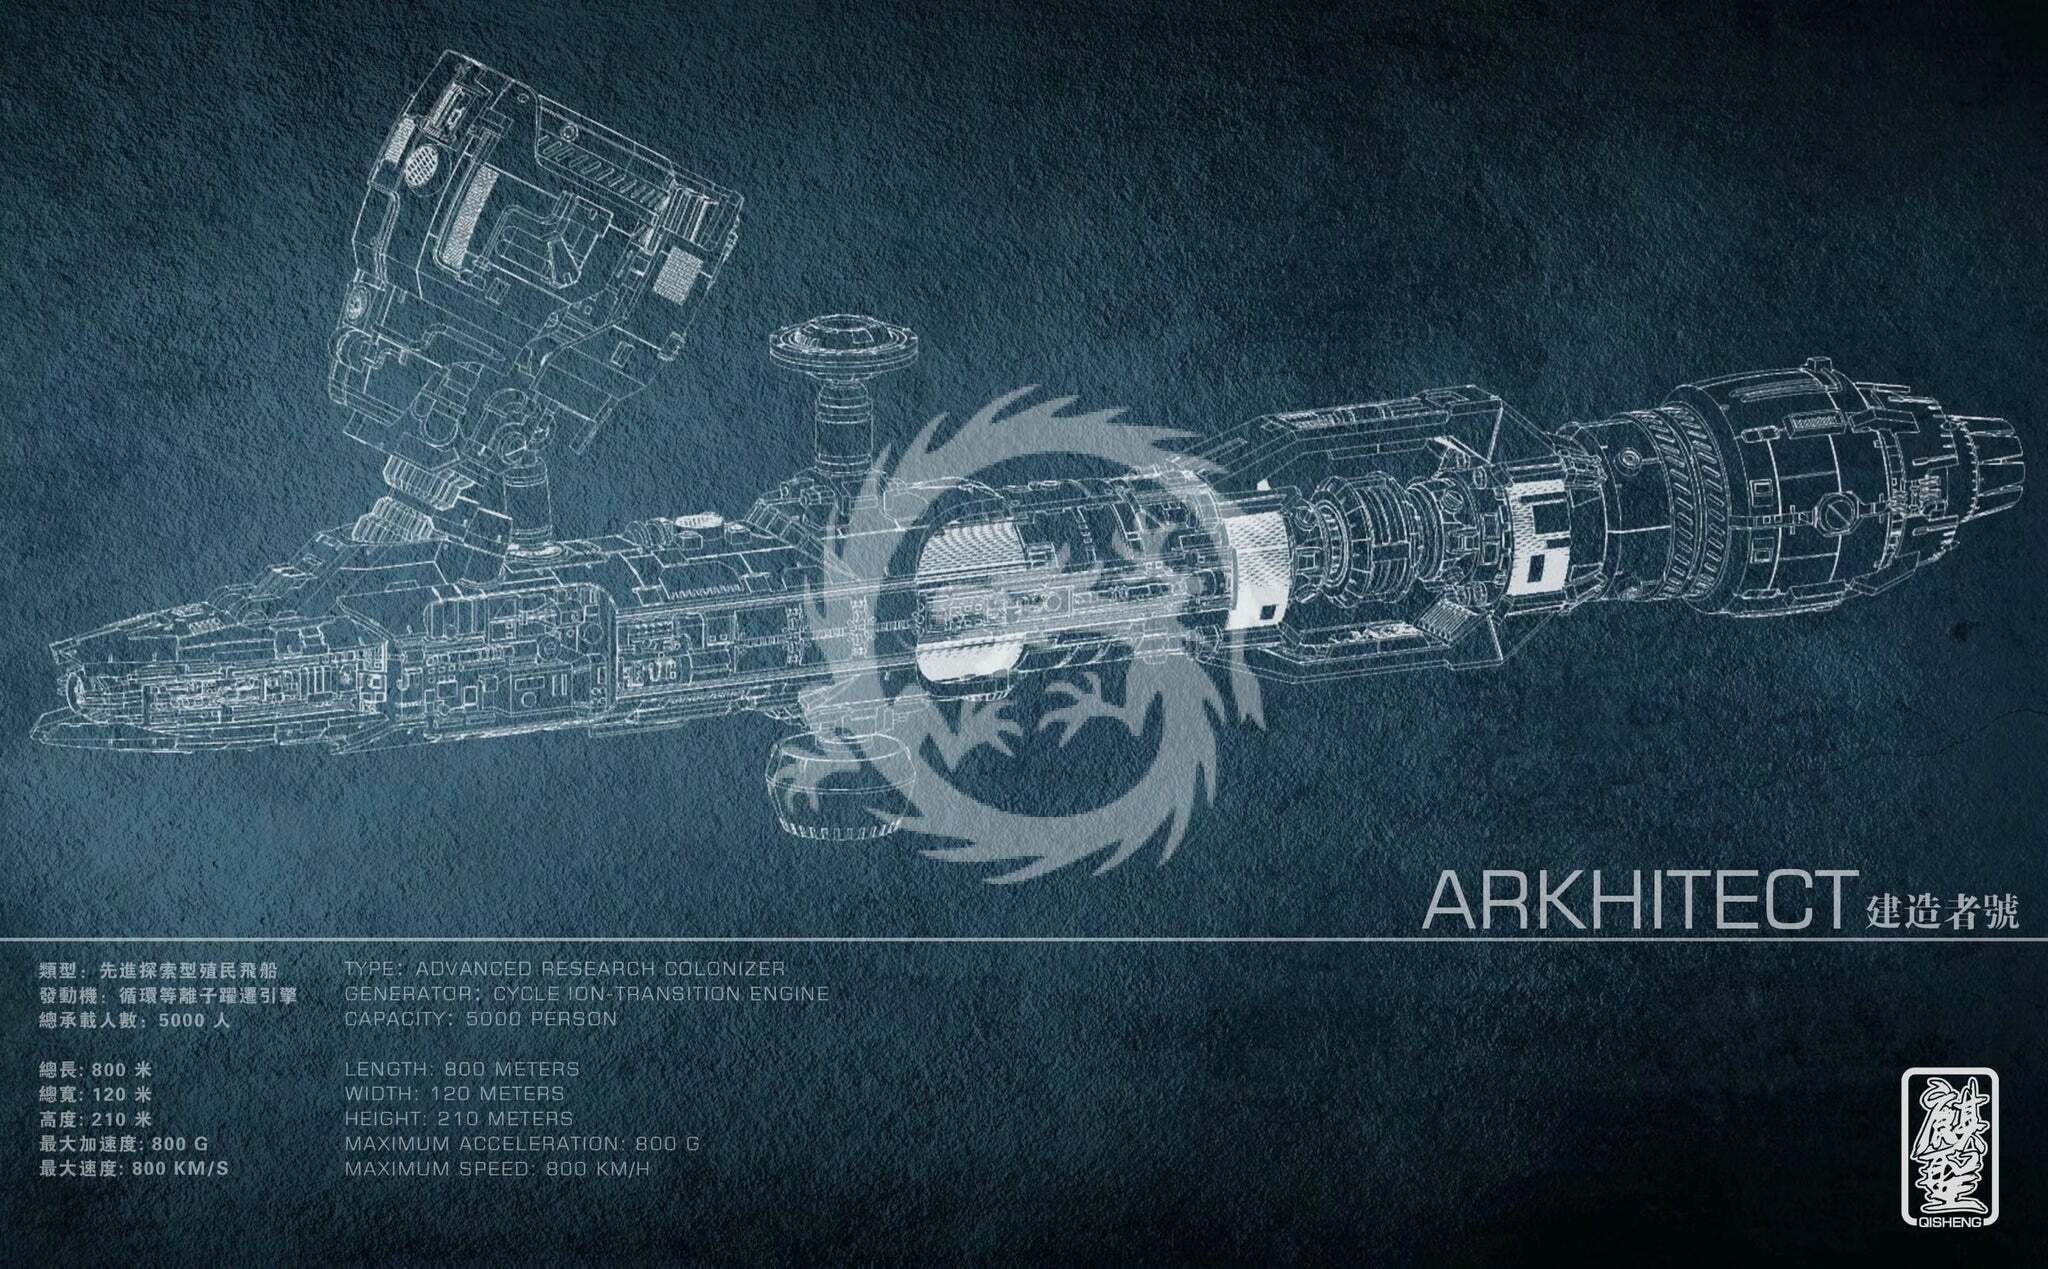 Arkhitect Spaceship Advanced Research Colonizer (Iwata Exclusive Ver.)  1/3000